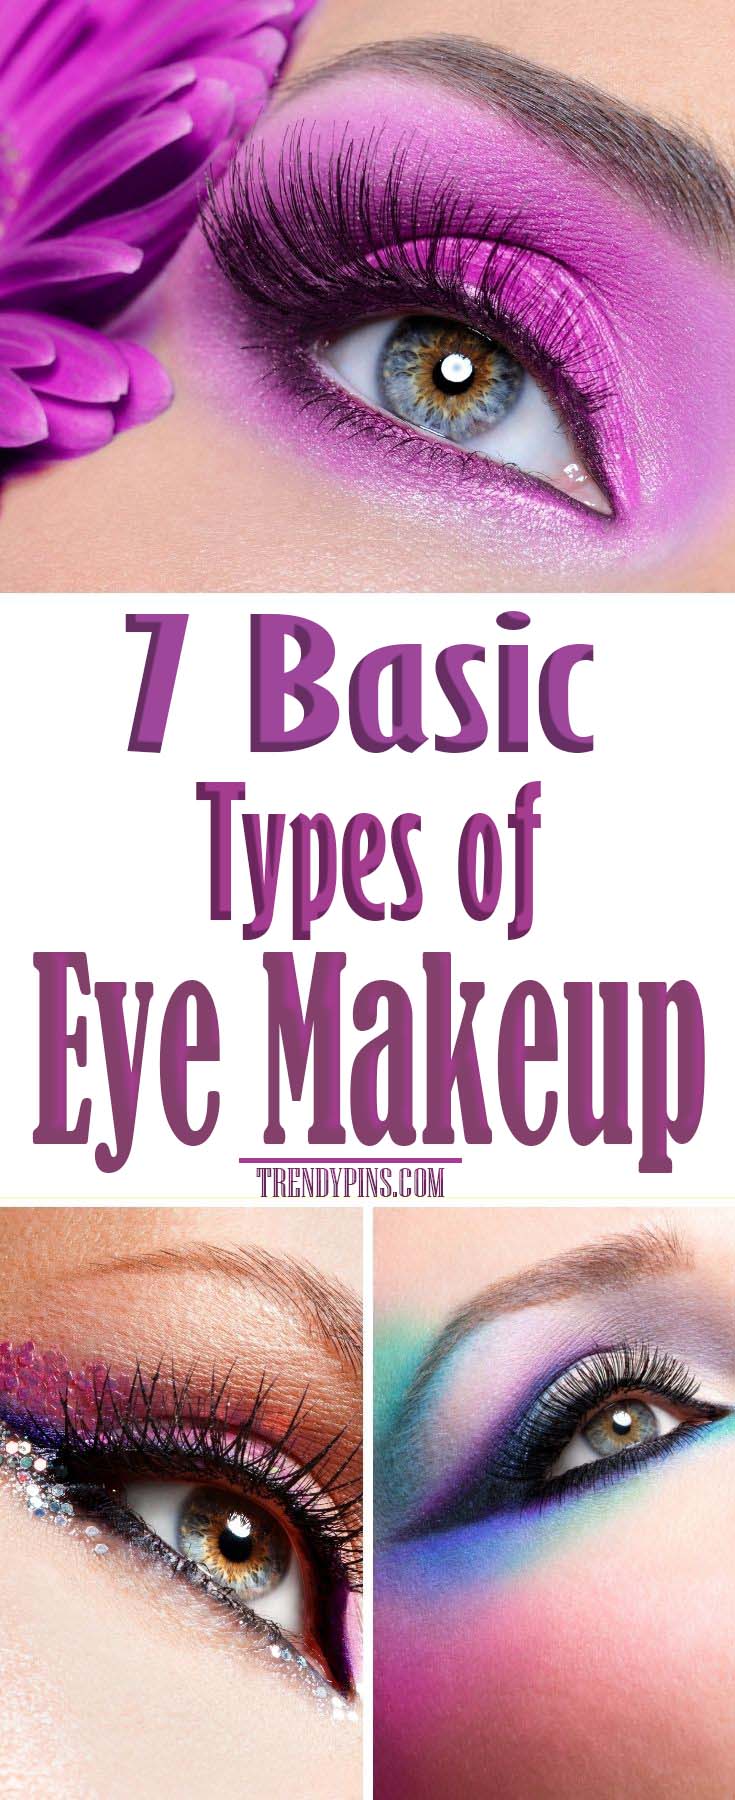 7 Basic Types Of Eye Makeup #makeup #beauty #trendypins